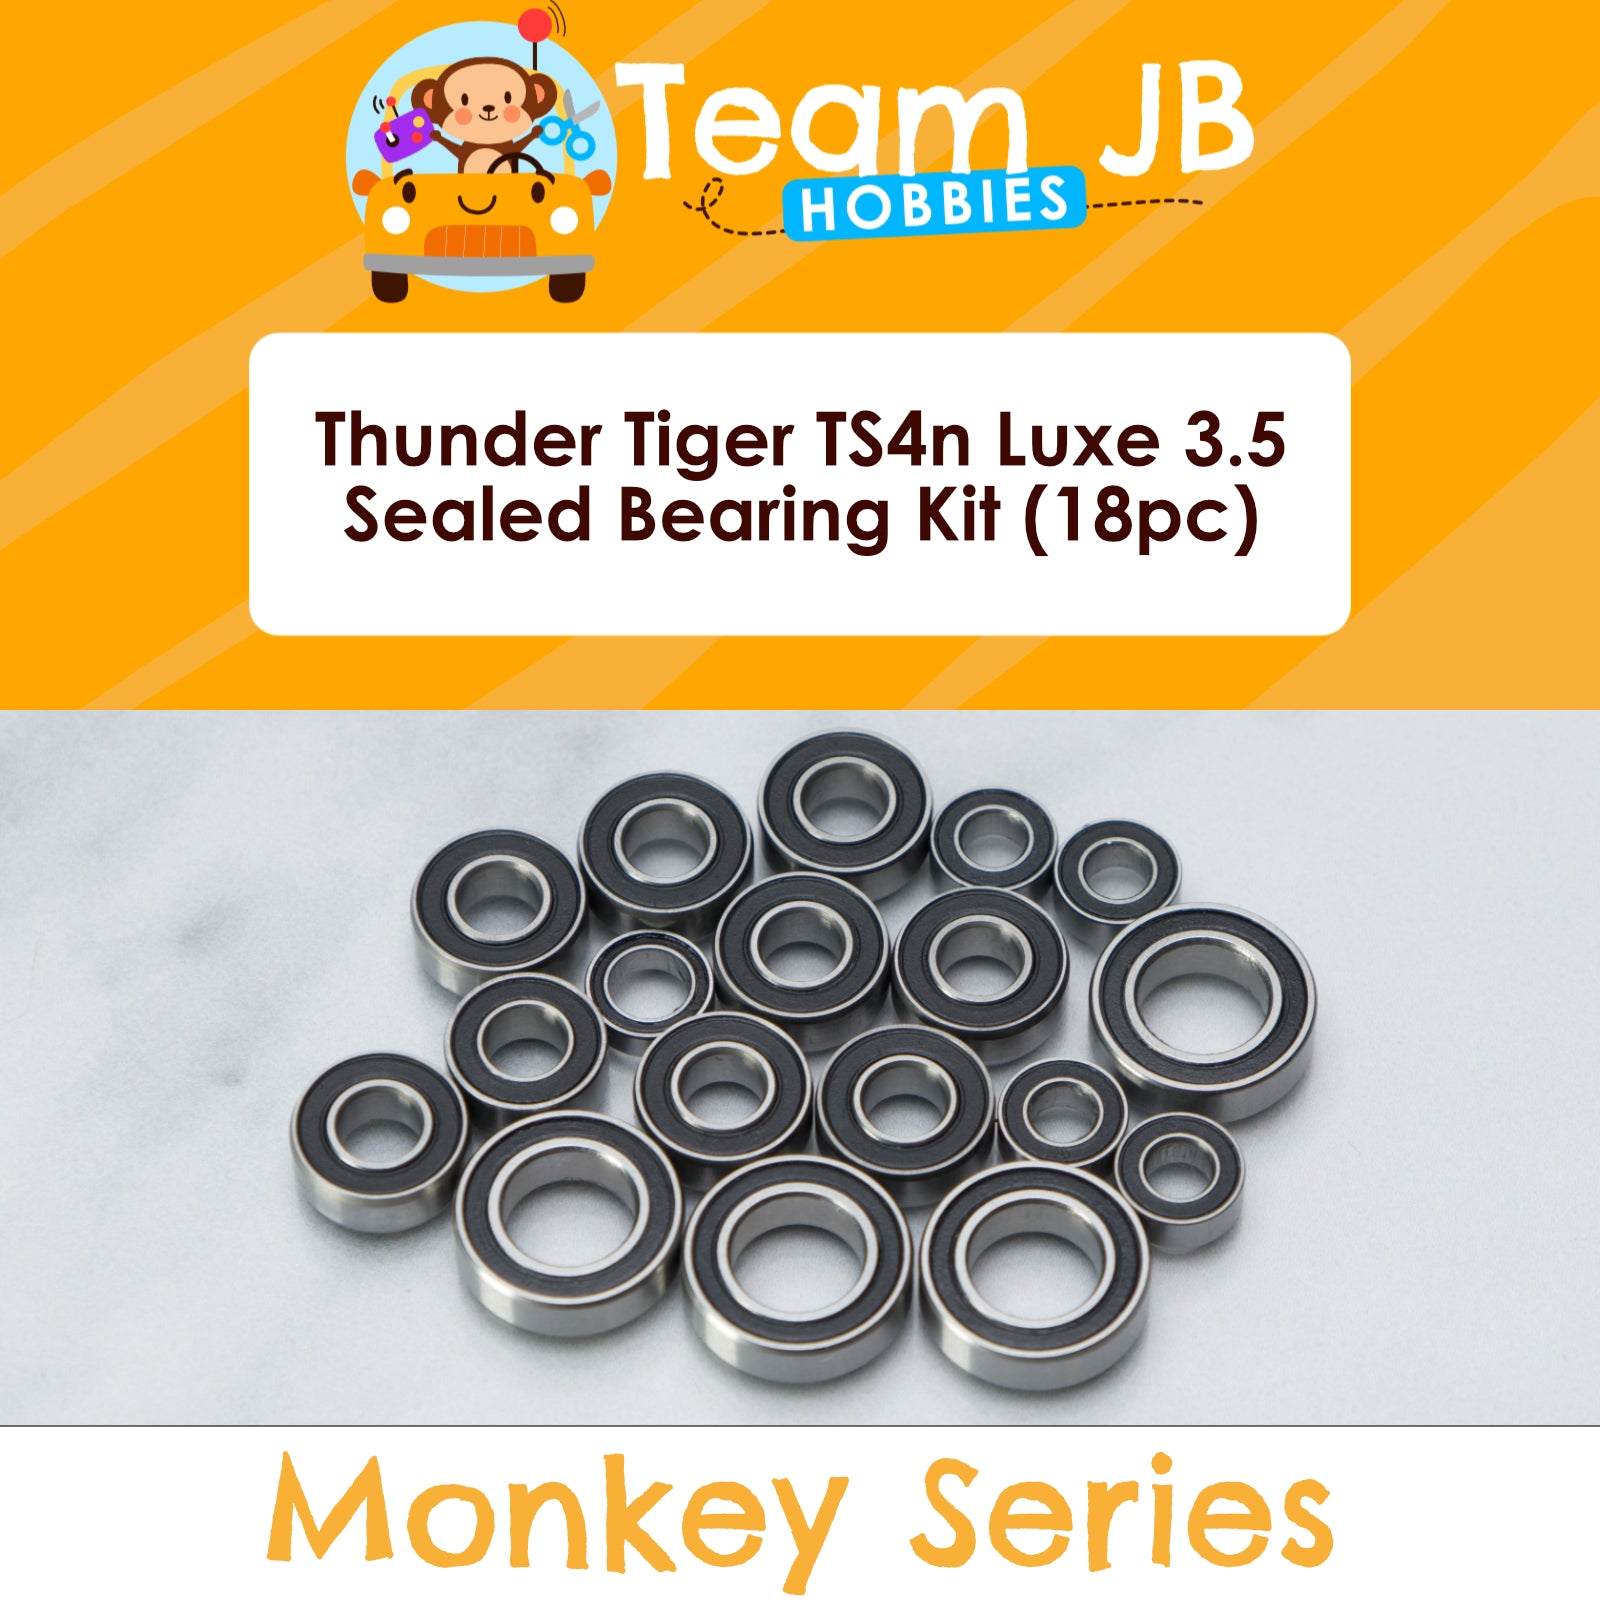 Thunder Tiger TS4n Luxe 3.5 - Sealed Bearing Kit